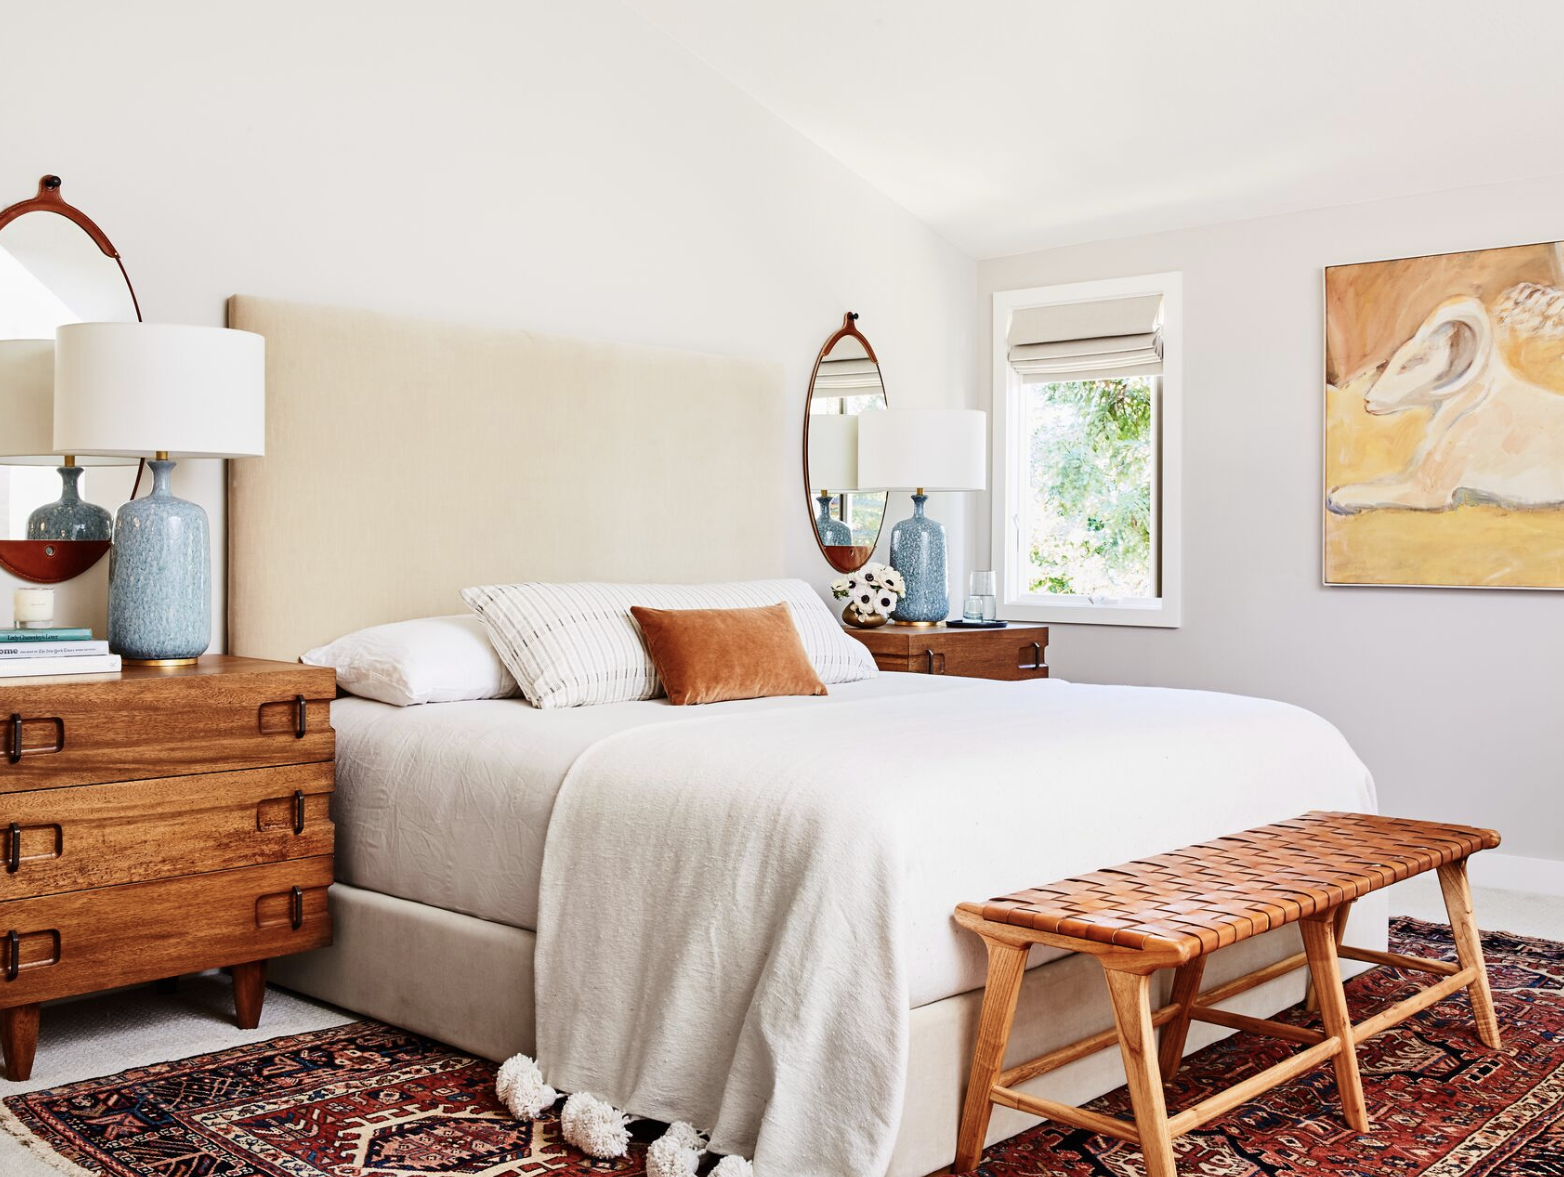 100 Stylish Bedroom Ideas - Modern Bedroom Design Inspiration